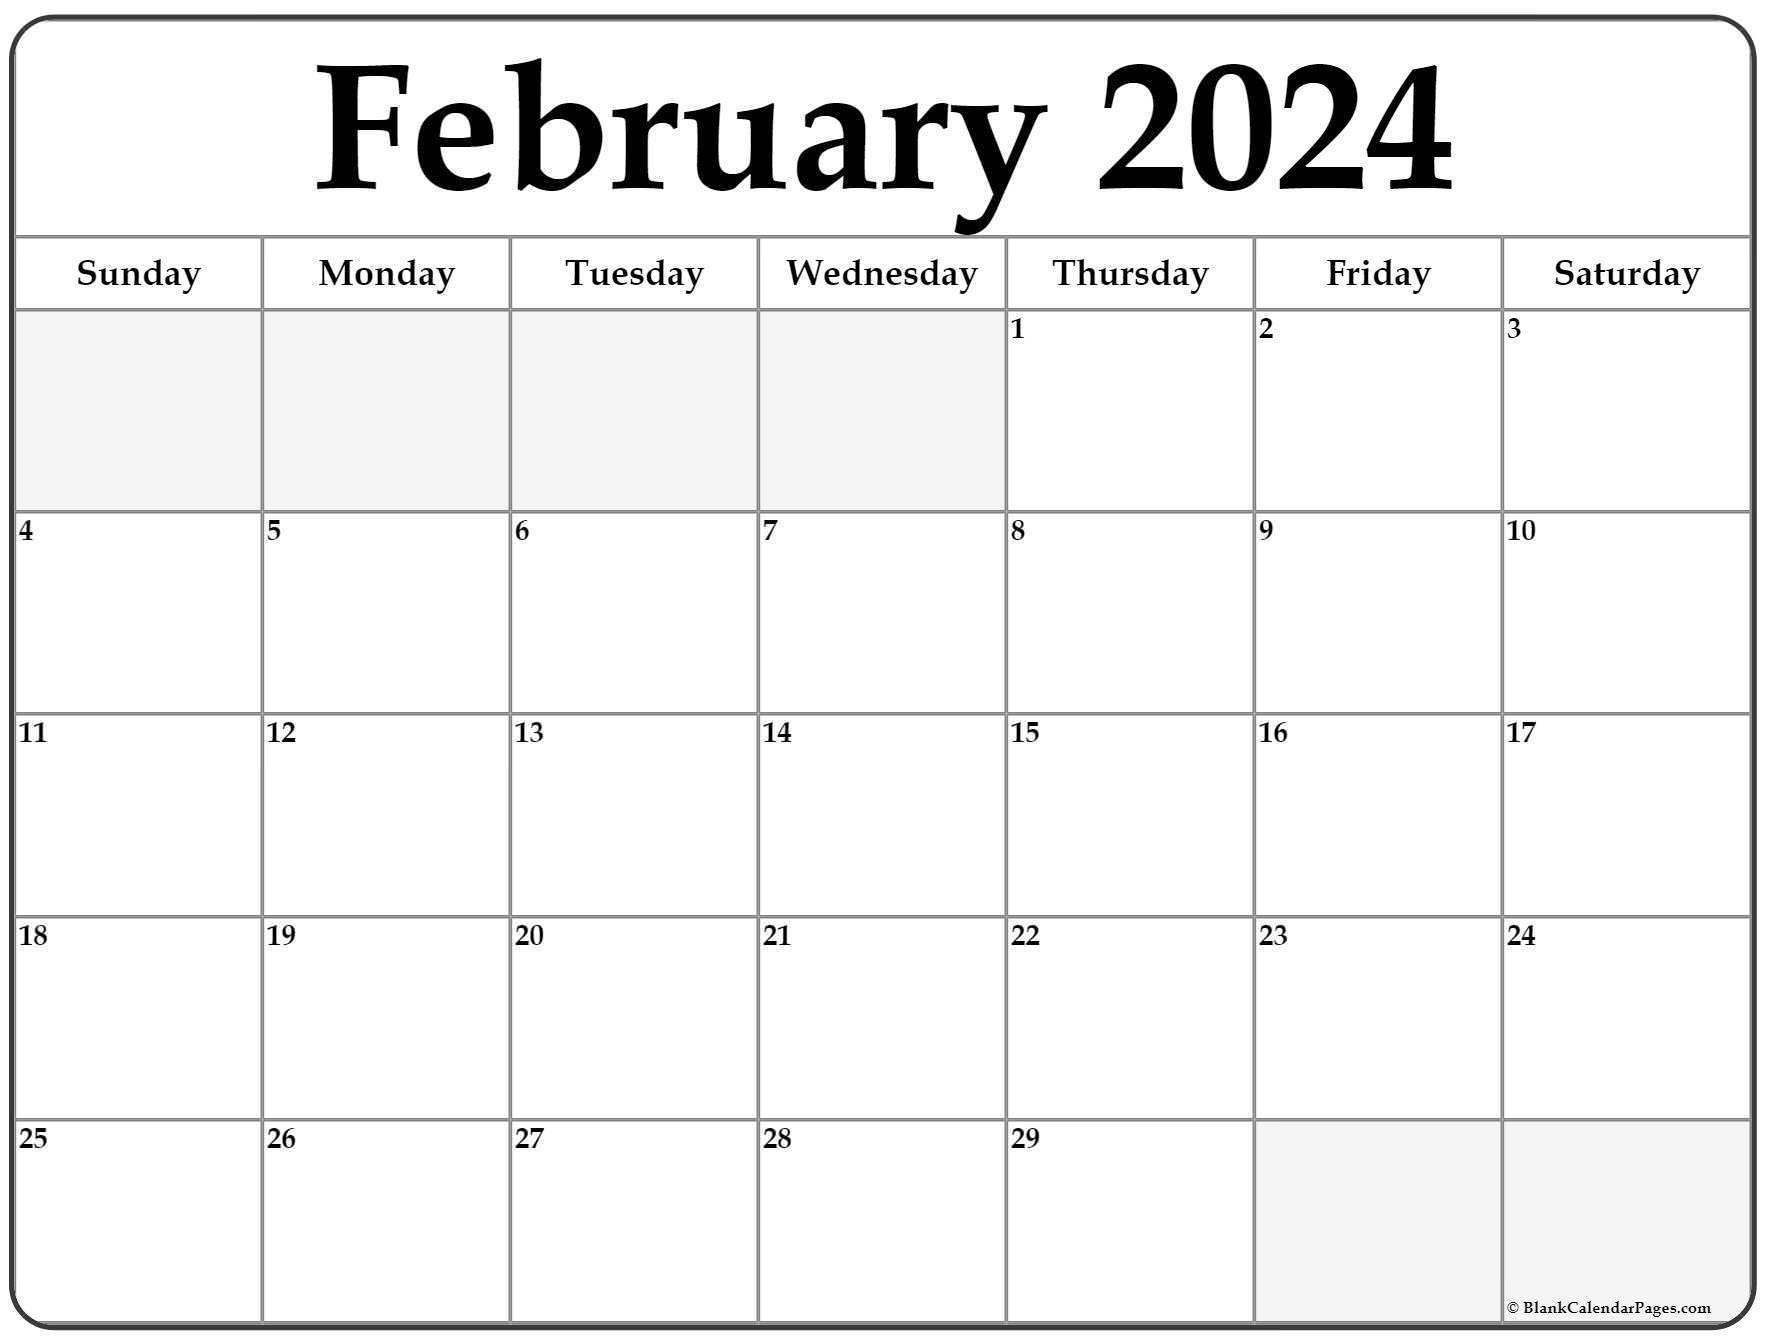 Feb 2022 Calendar Printable Free February 2022 Calendar | Free Printable Calendar Templates